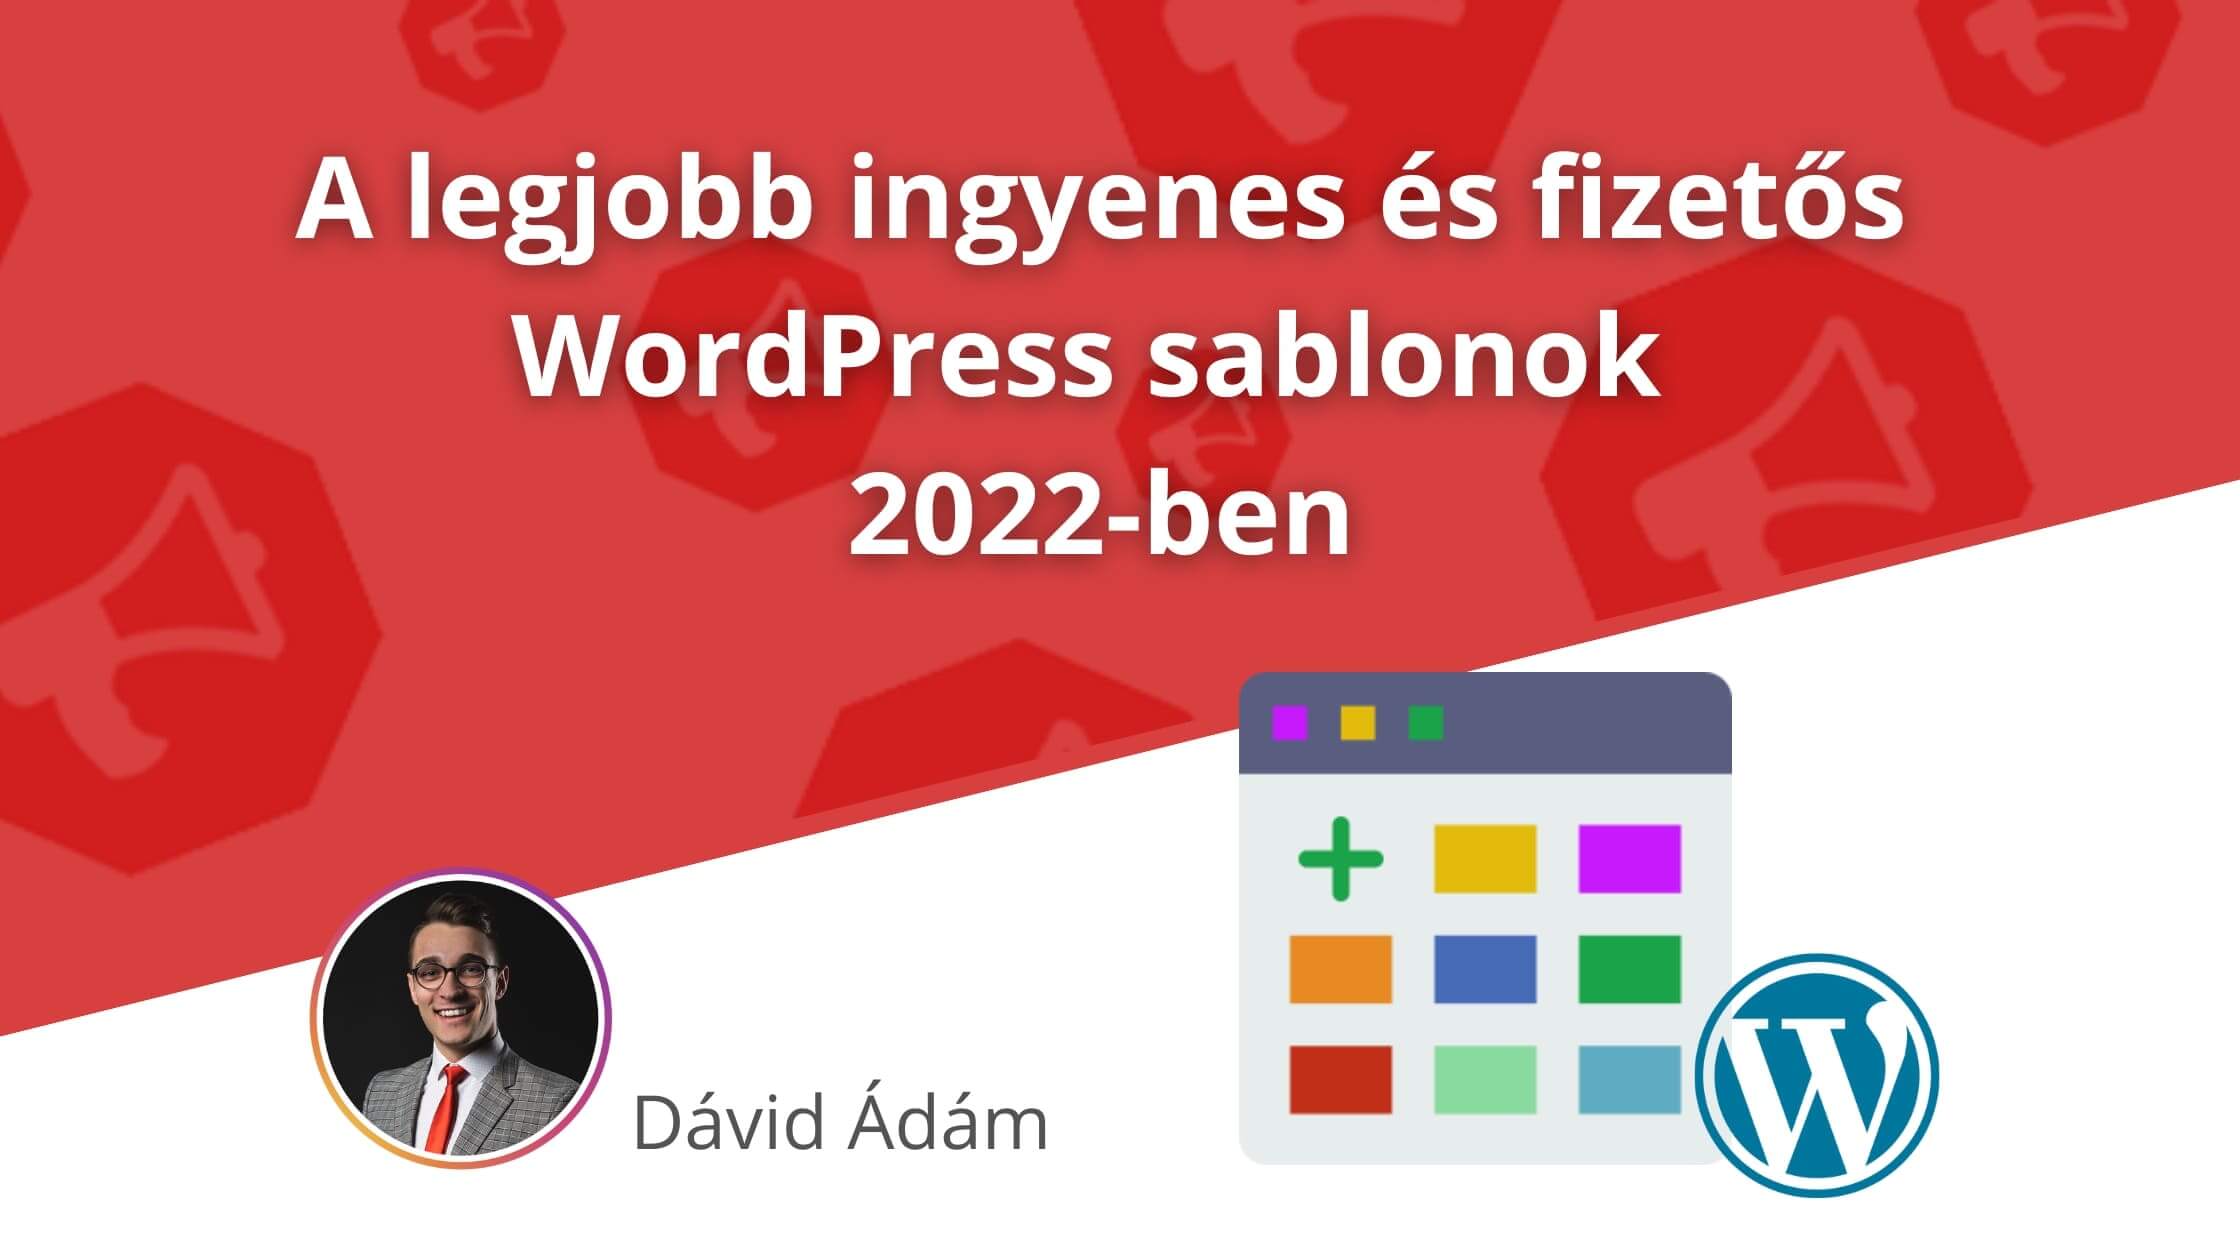 WordPress sablonok